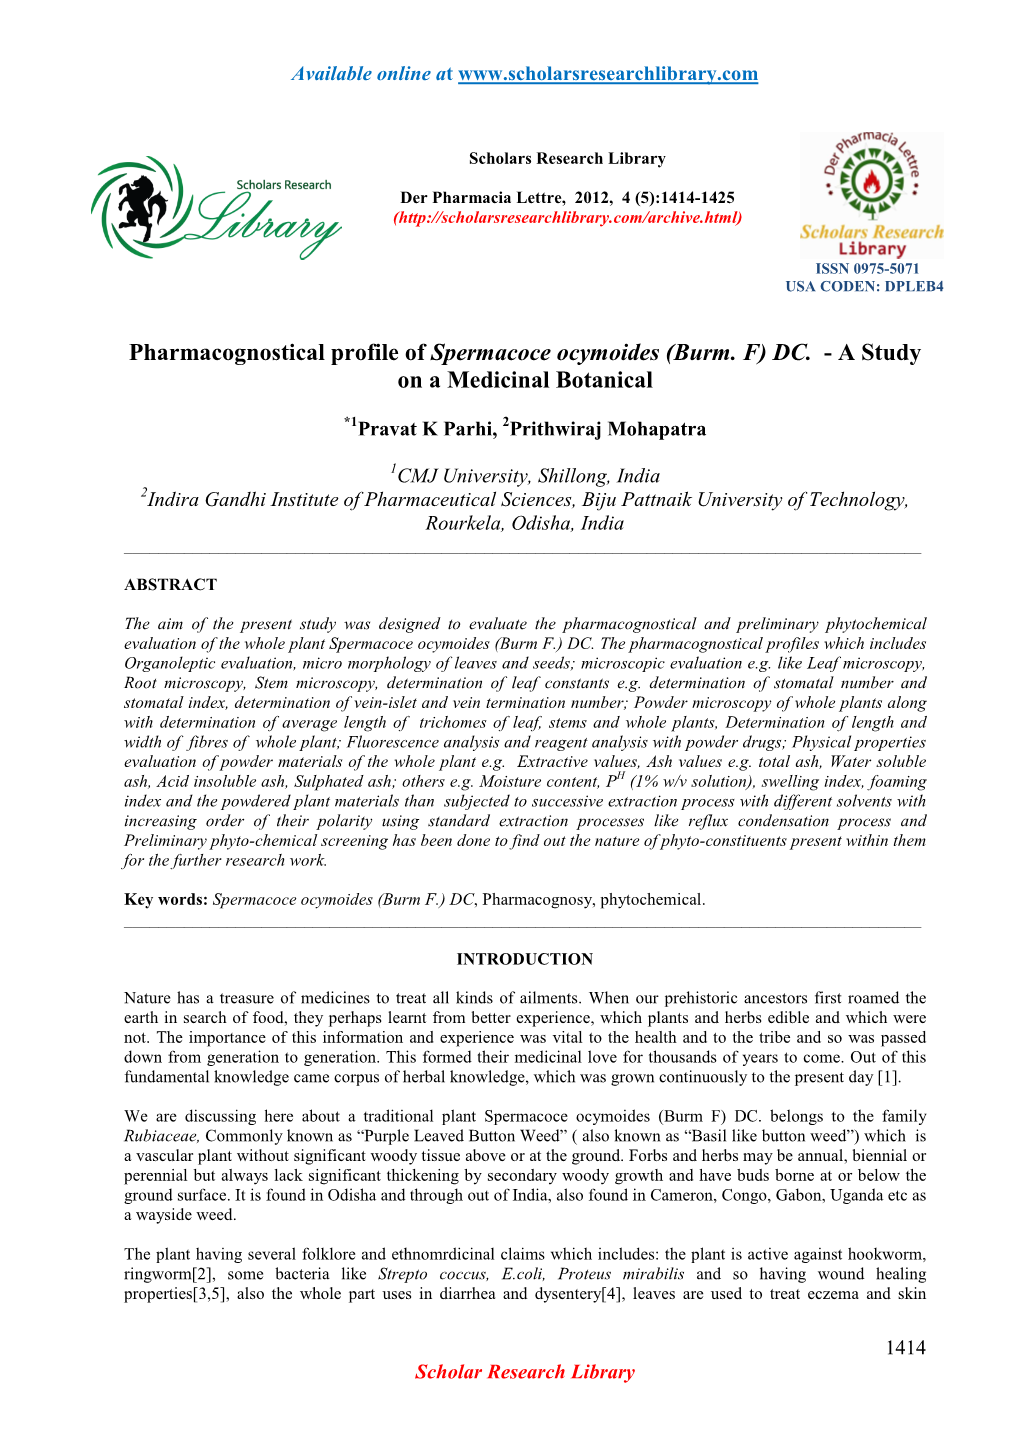 Pharmacognostical Profile of Spermacoce Ocymoides (Burm. F) DC